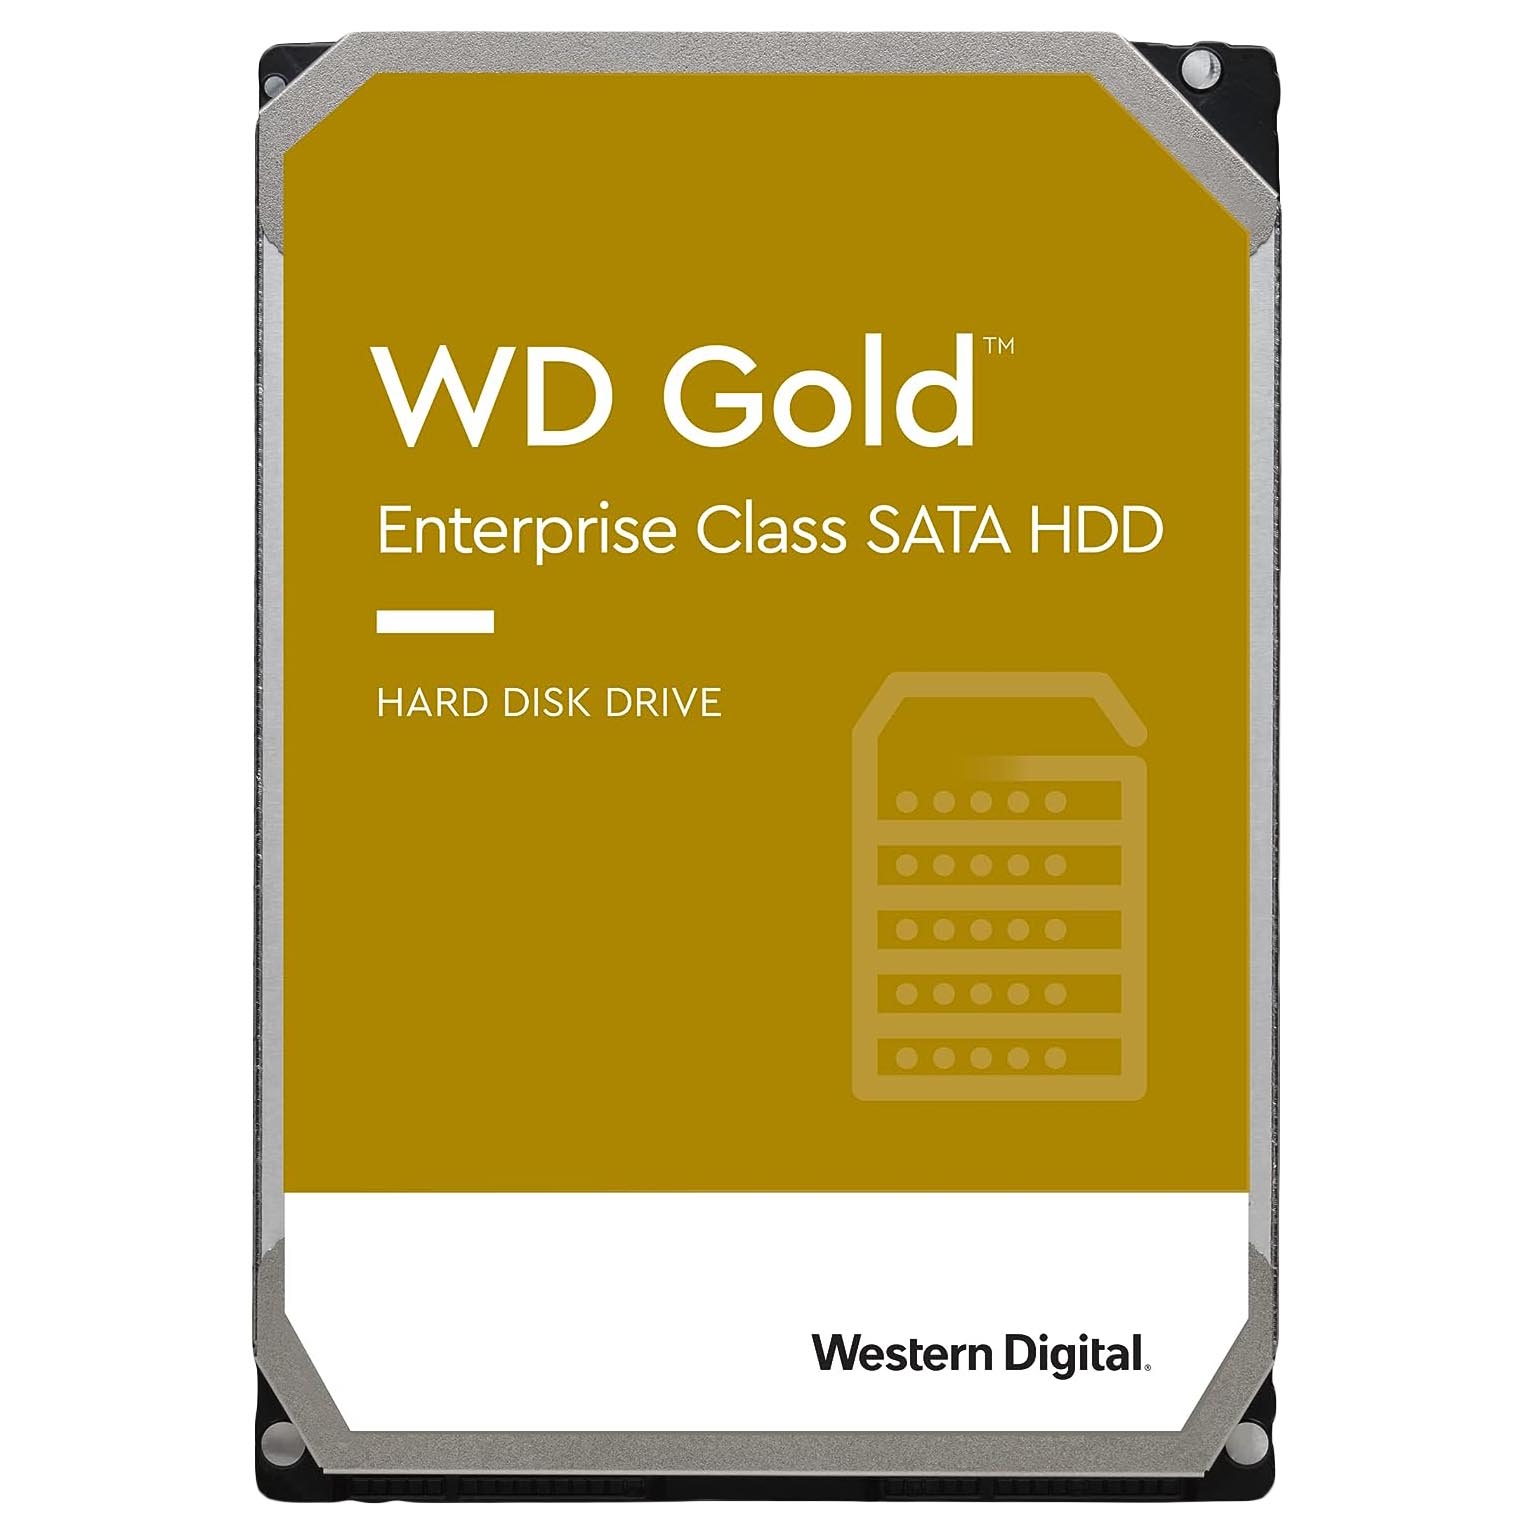 Внутренний жесткий диск Western Digital WD Gold Enterprise Class, WD4003VRYZ, 4Тб жесткий диск western digital wd gold 6 тб 3 5 wd6003fryz